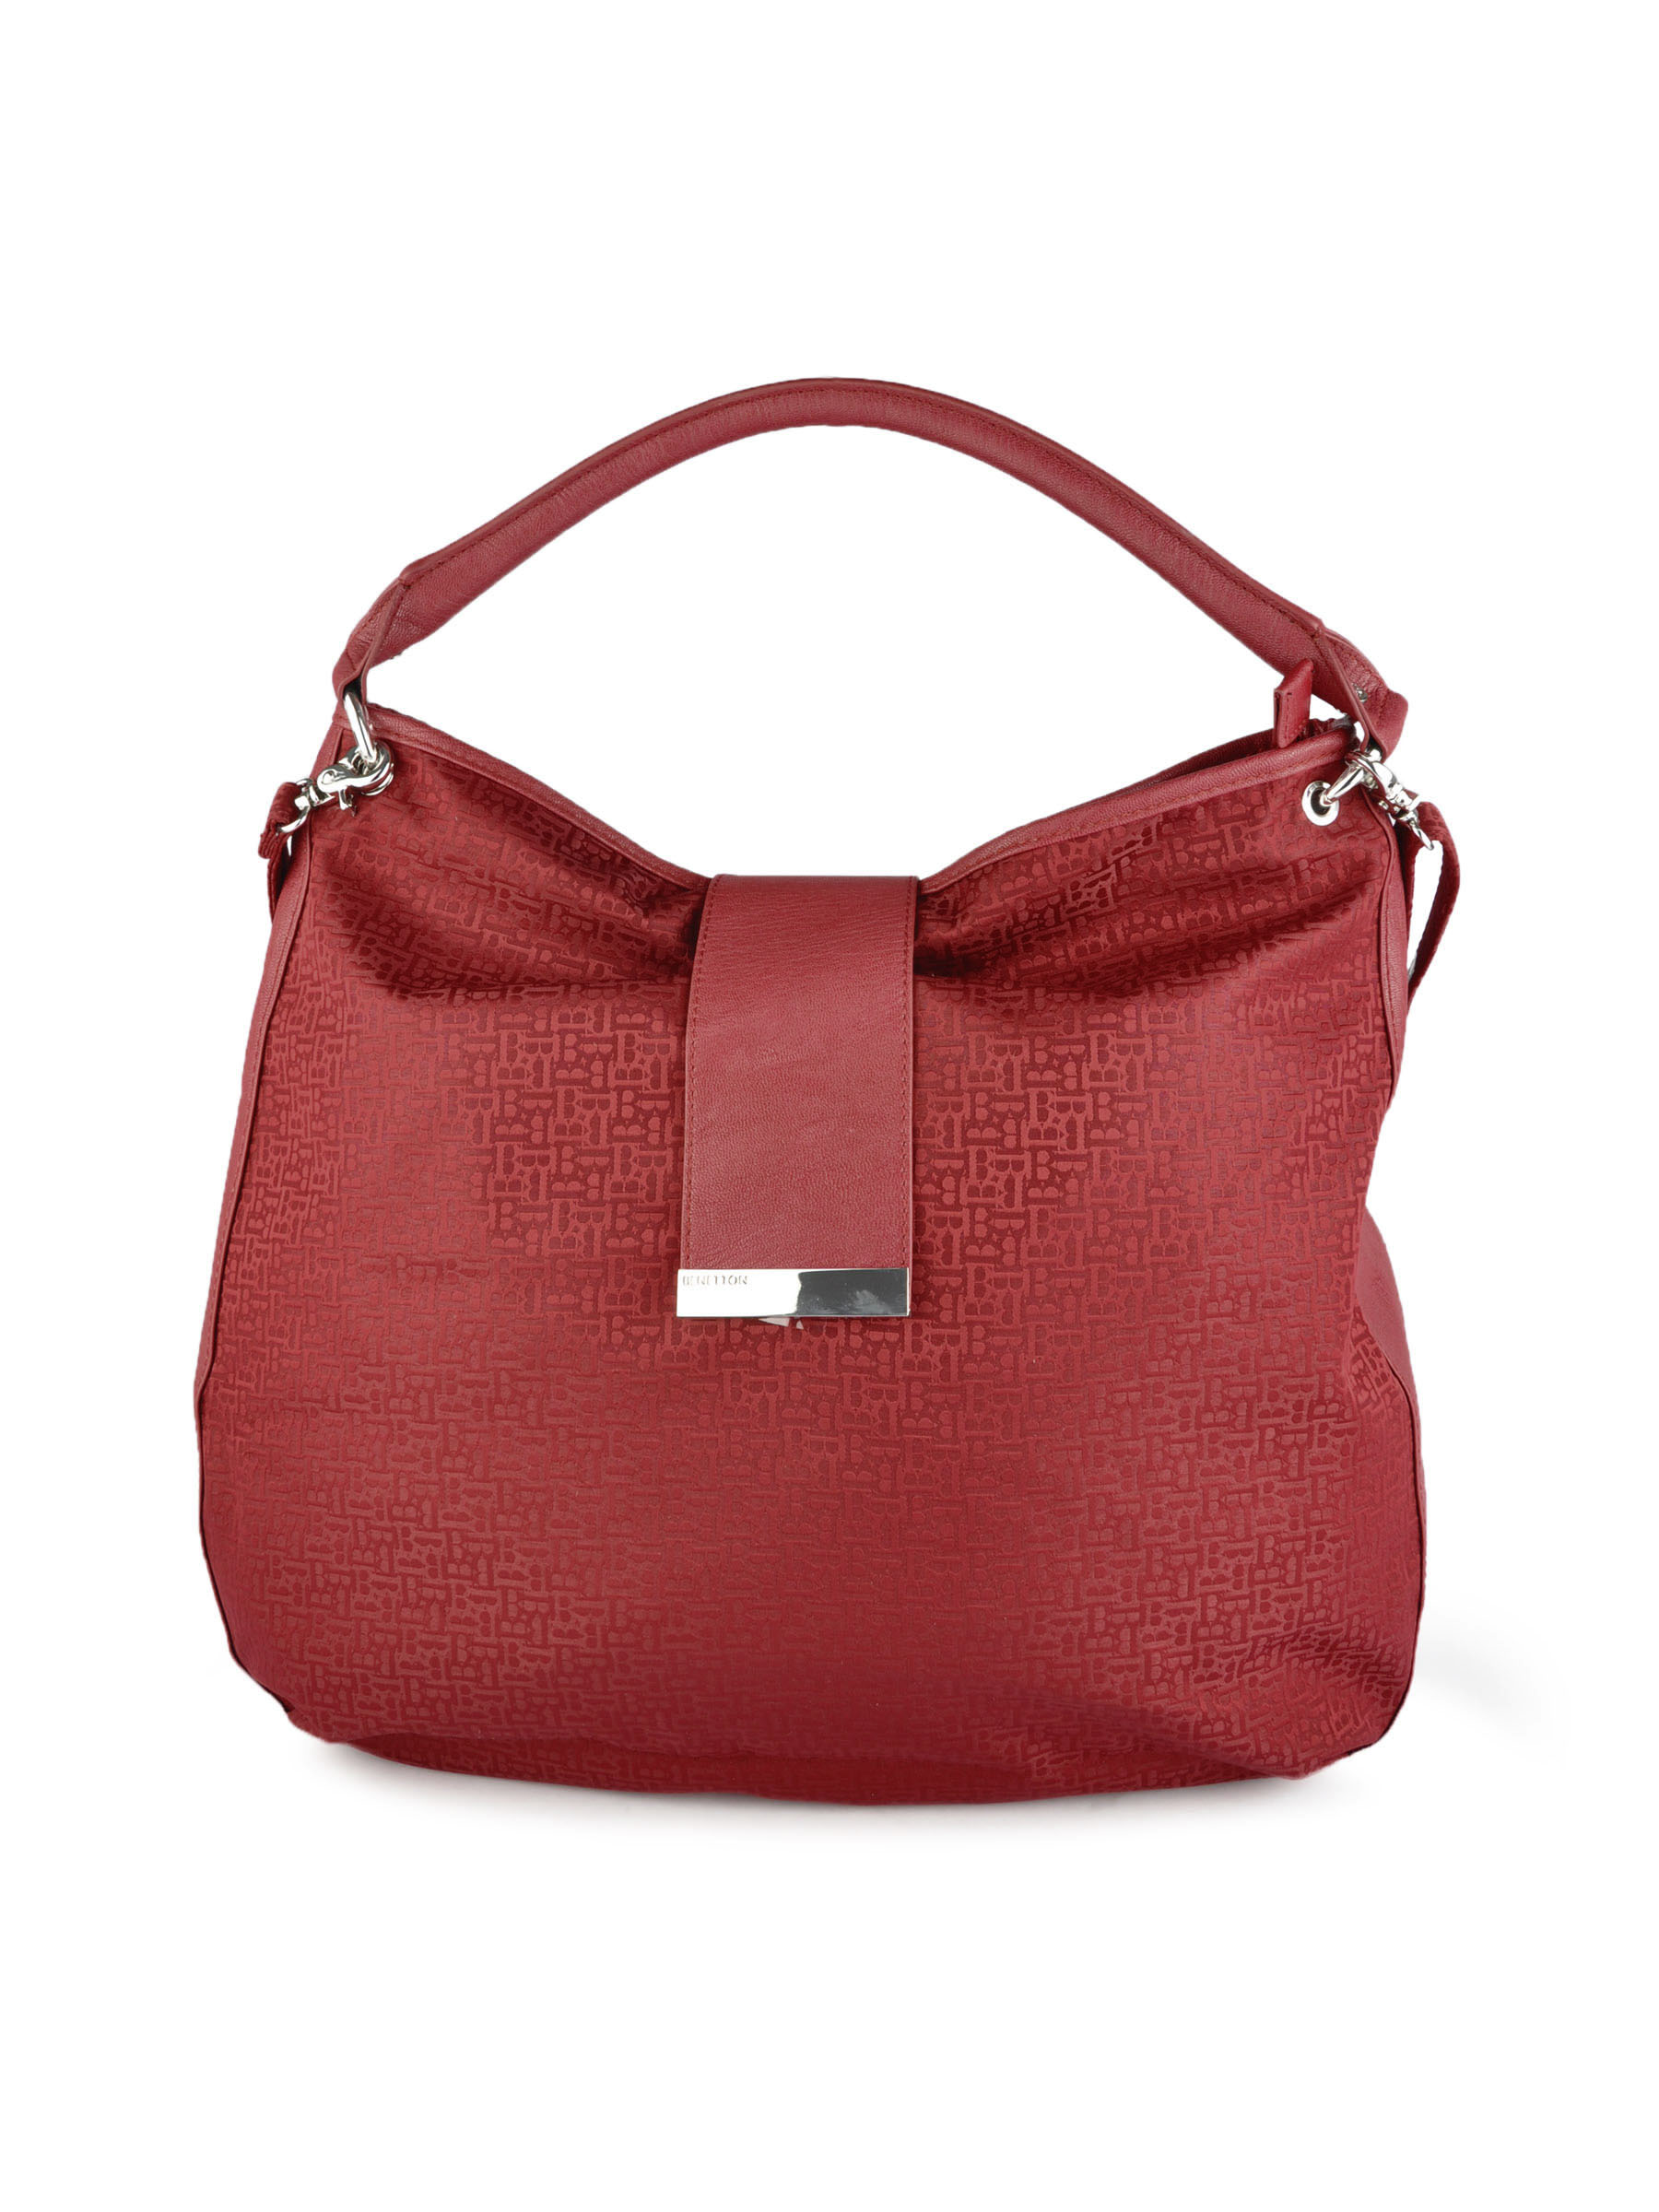 United Colors of Benetton Women Solid Maroon Handbags